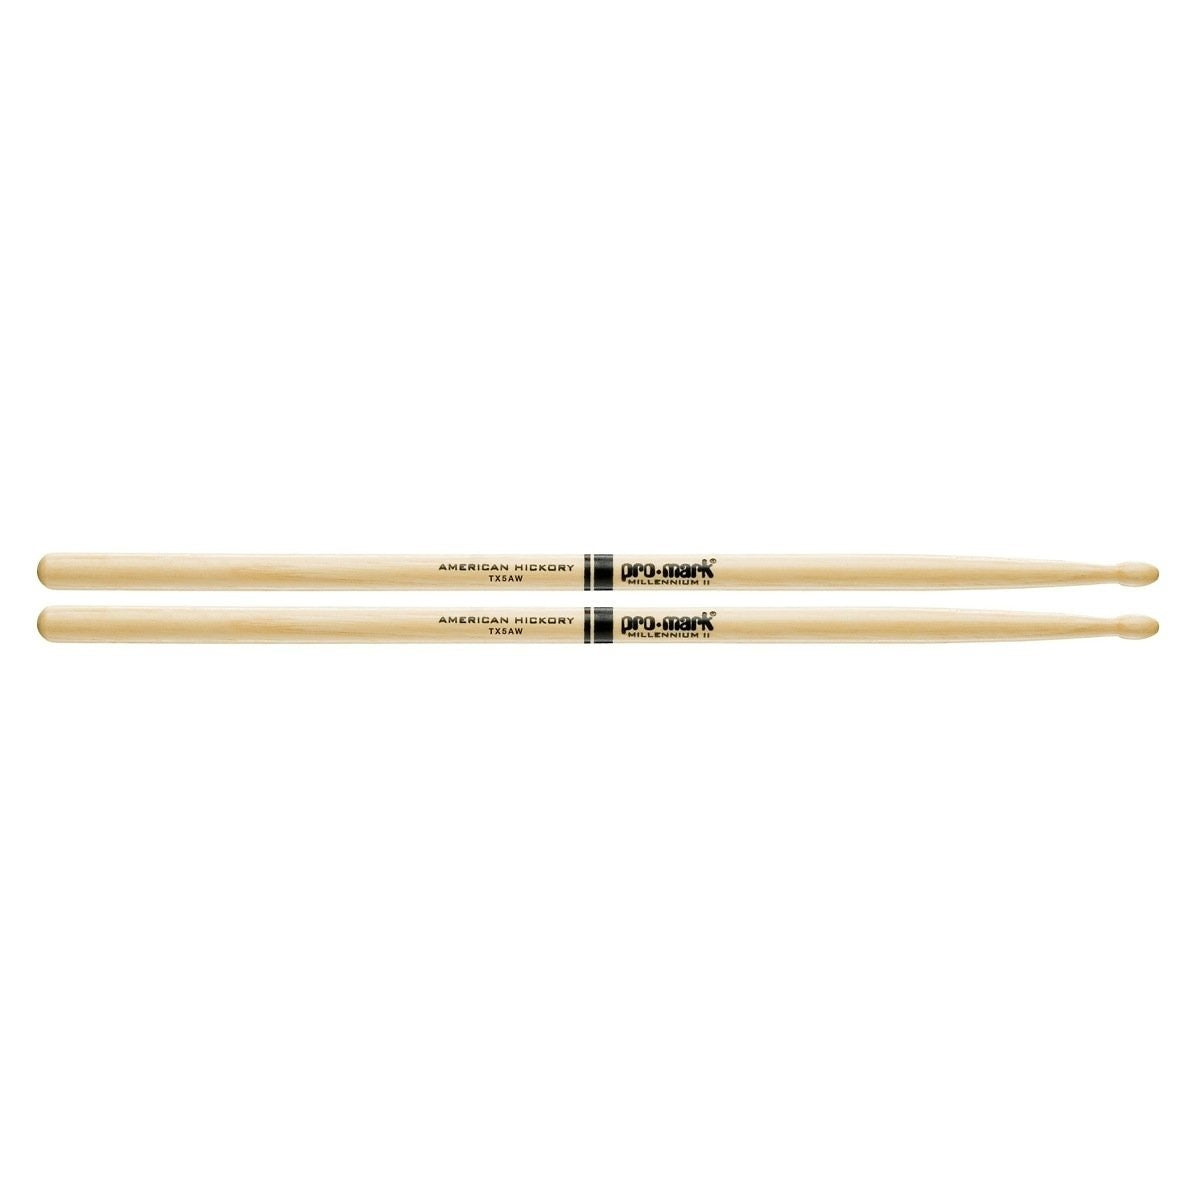 ProMark 5A Drumsticks, Wood Tip, Pair